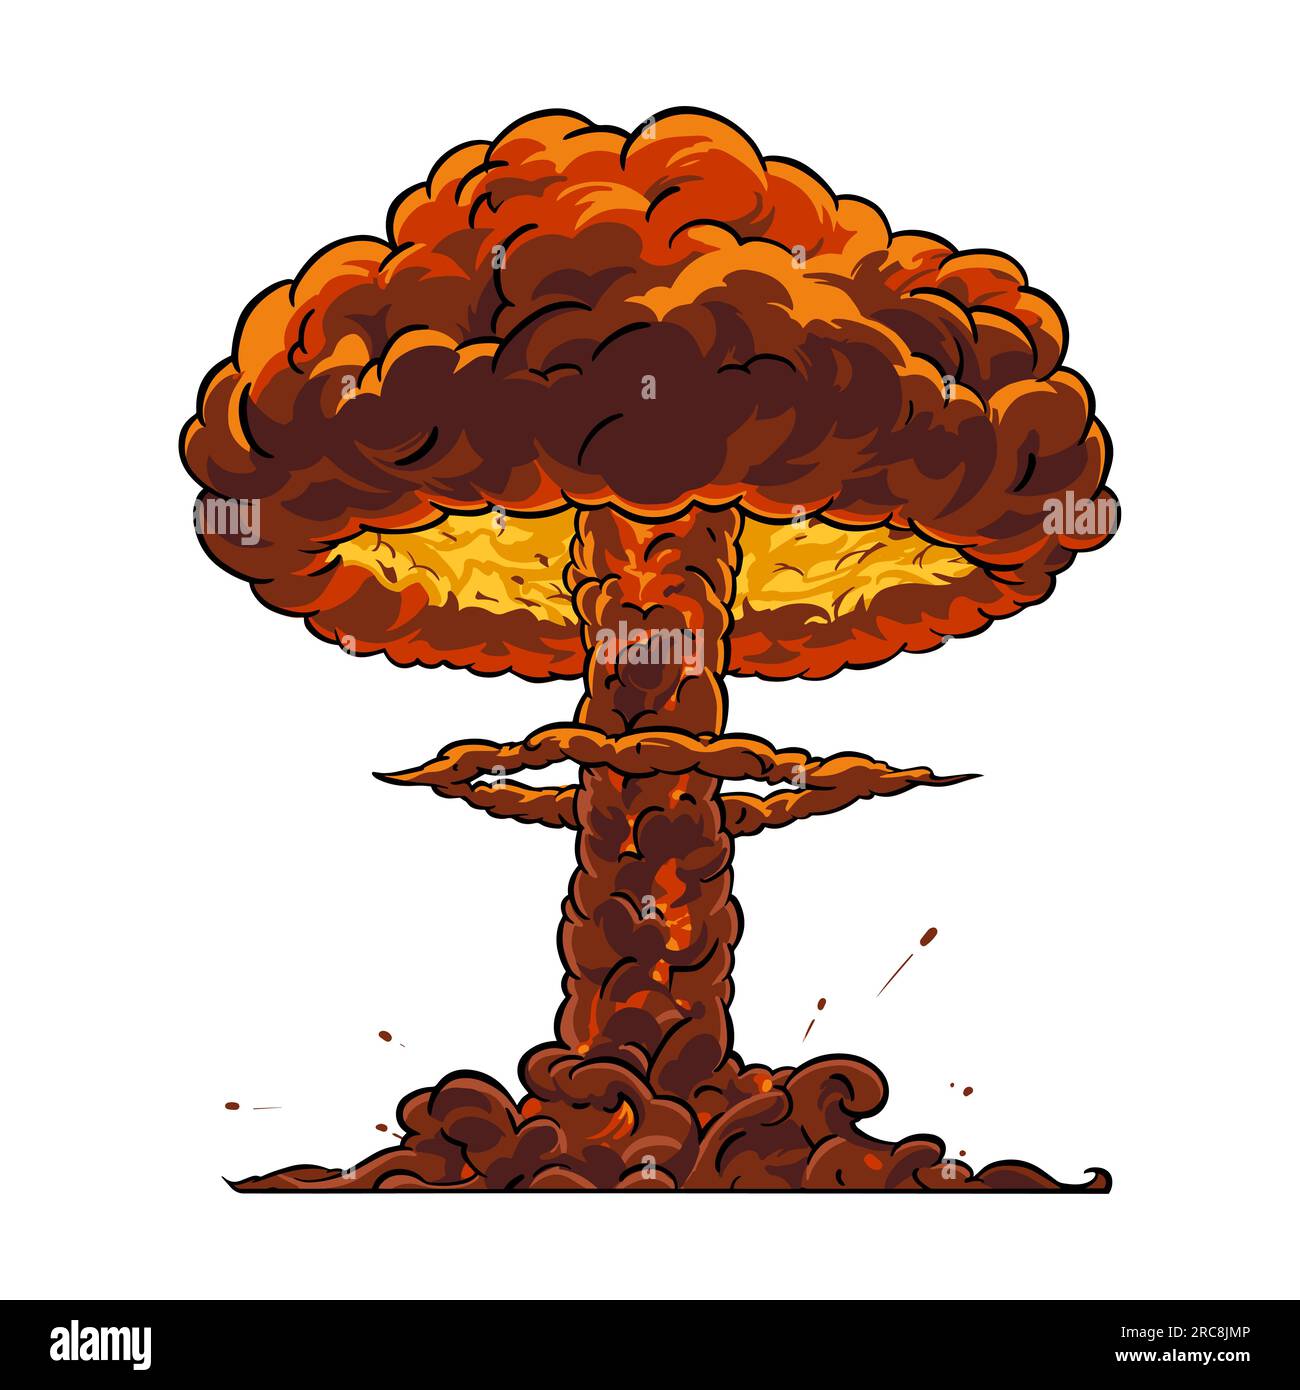 Mushroom cloud of nuclear explosion in pop art style. Vector illustration Stock Vector